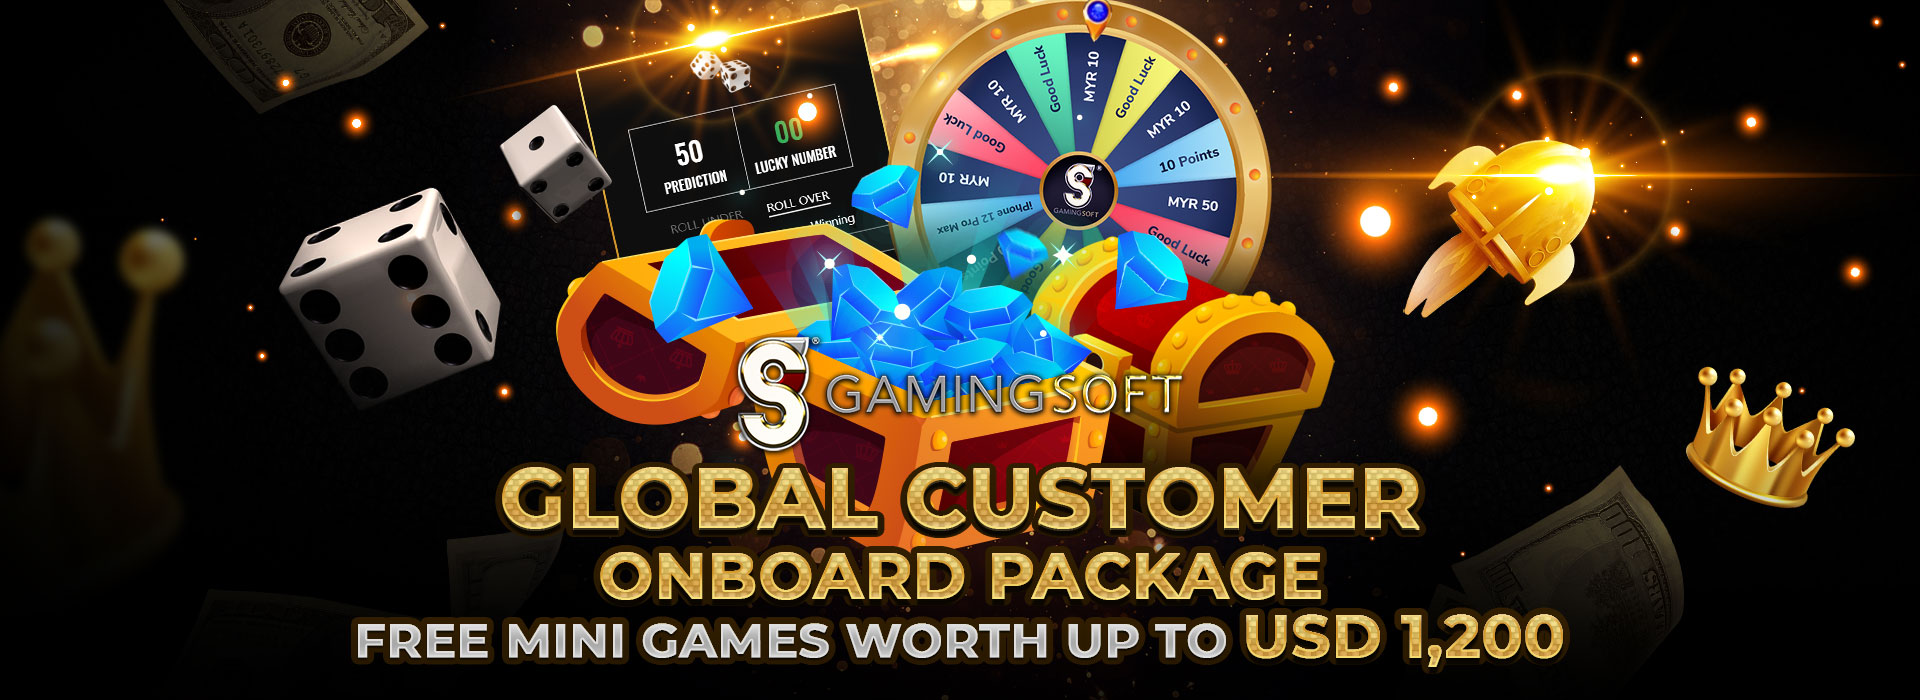 Global Customer Onboard Web Banner - GamingSoft